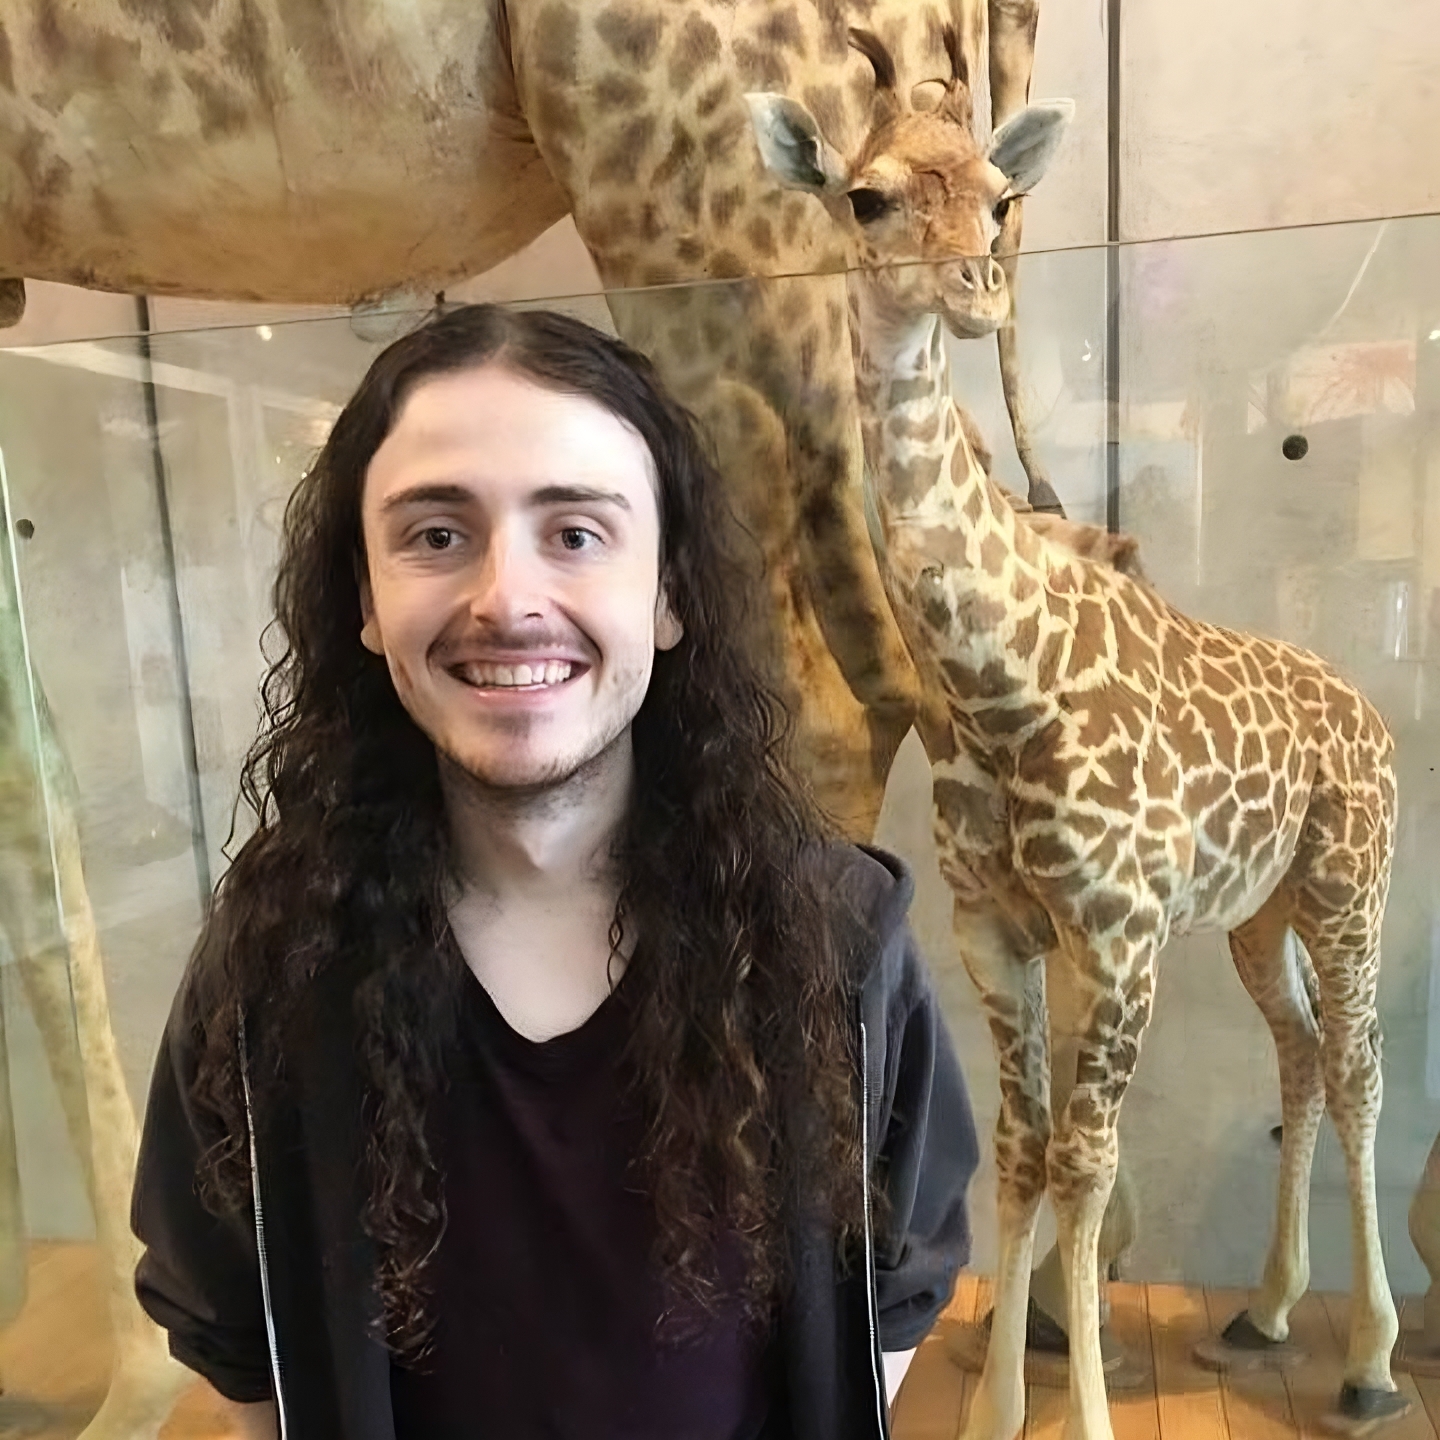 Forrest with giraffe